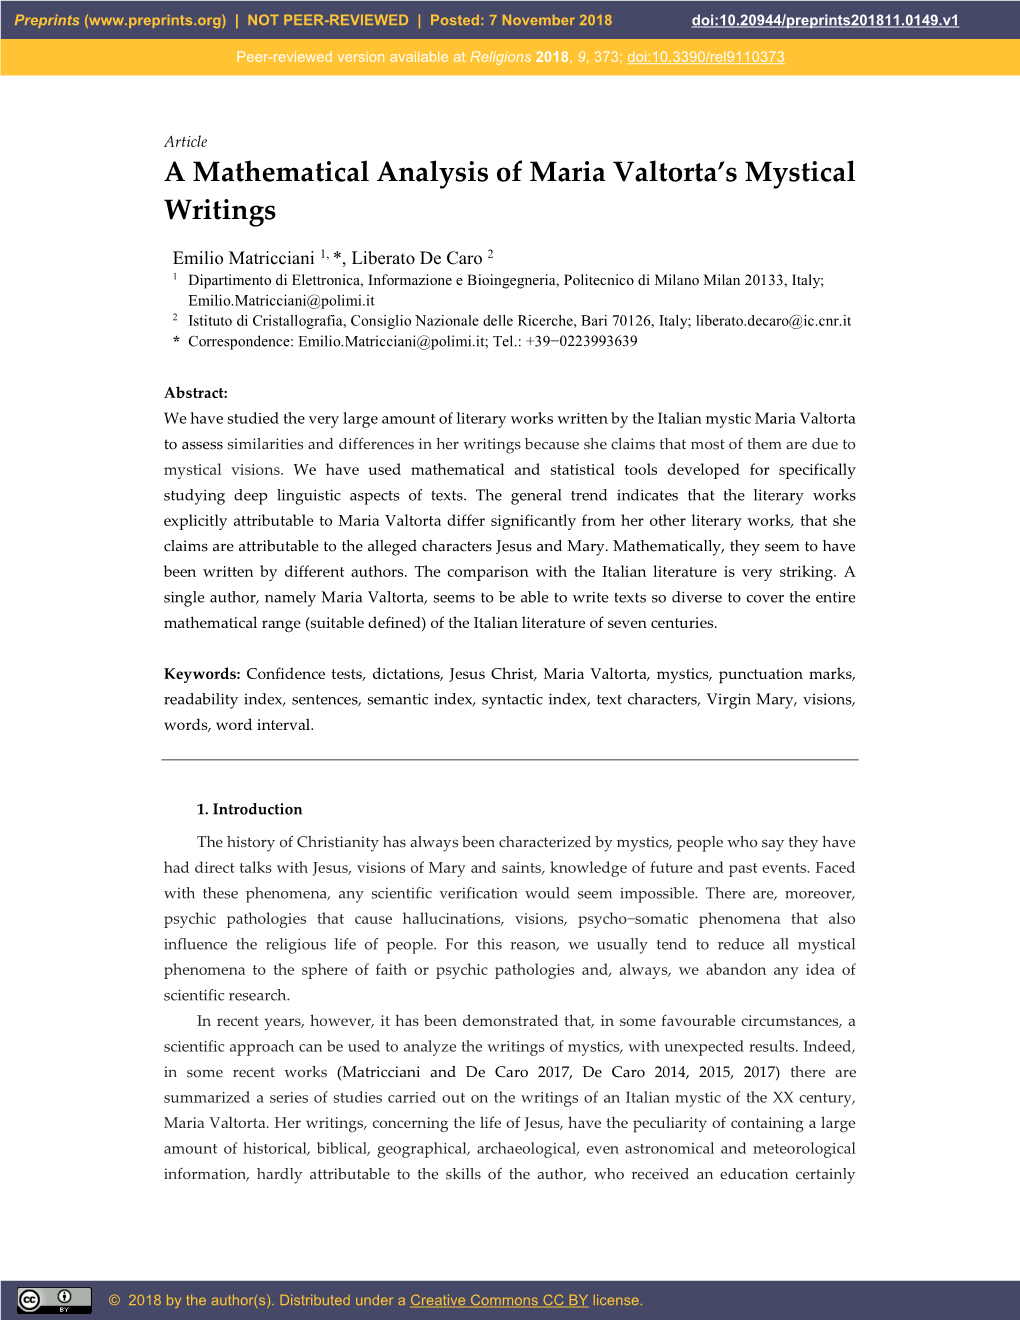 A Mathematical Analysis of Maria Valtorta's Mystical Writings